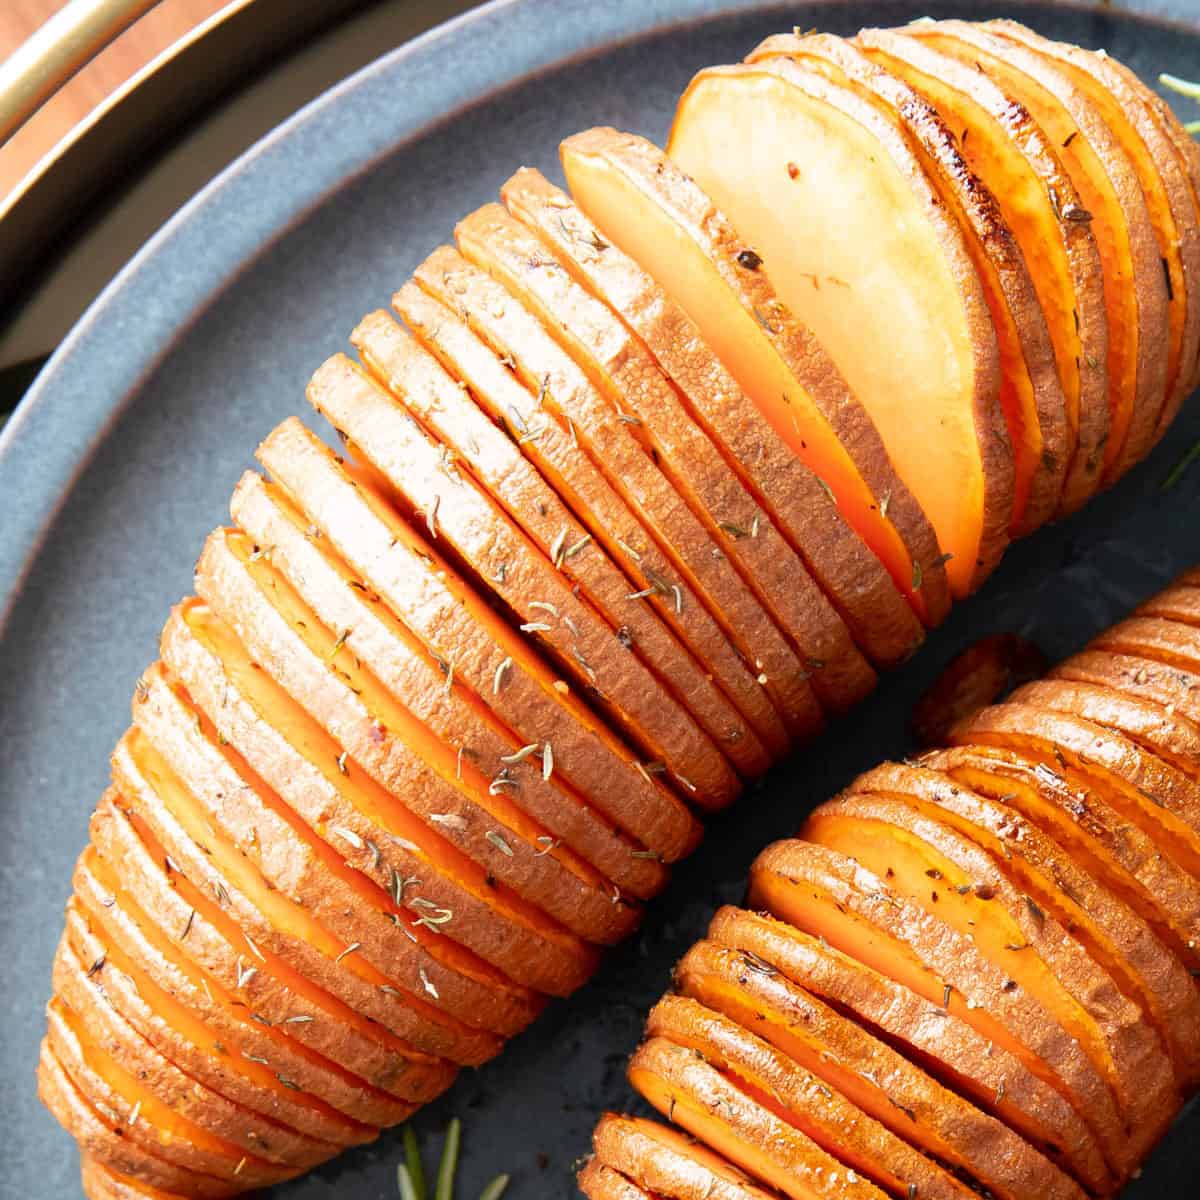 Closeup photo of Hasselback sweet potatoes to show texture